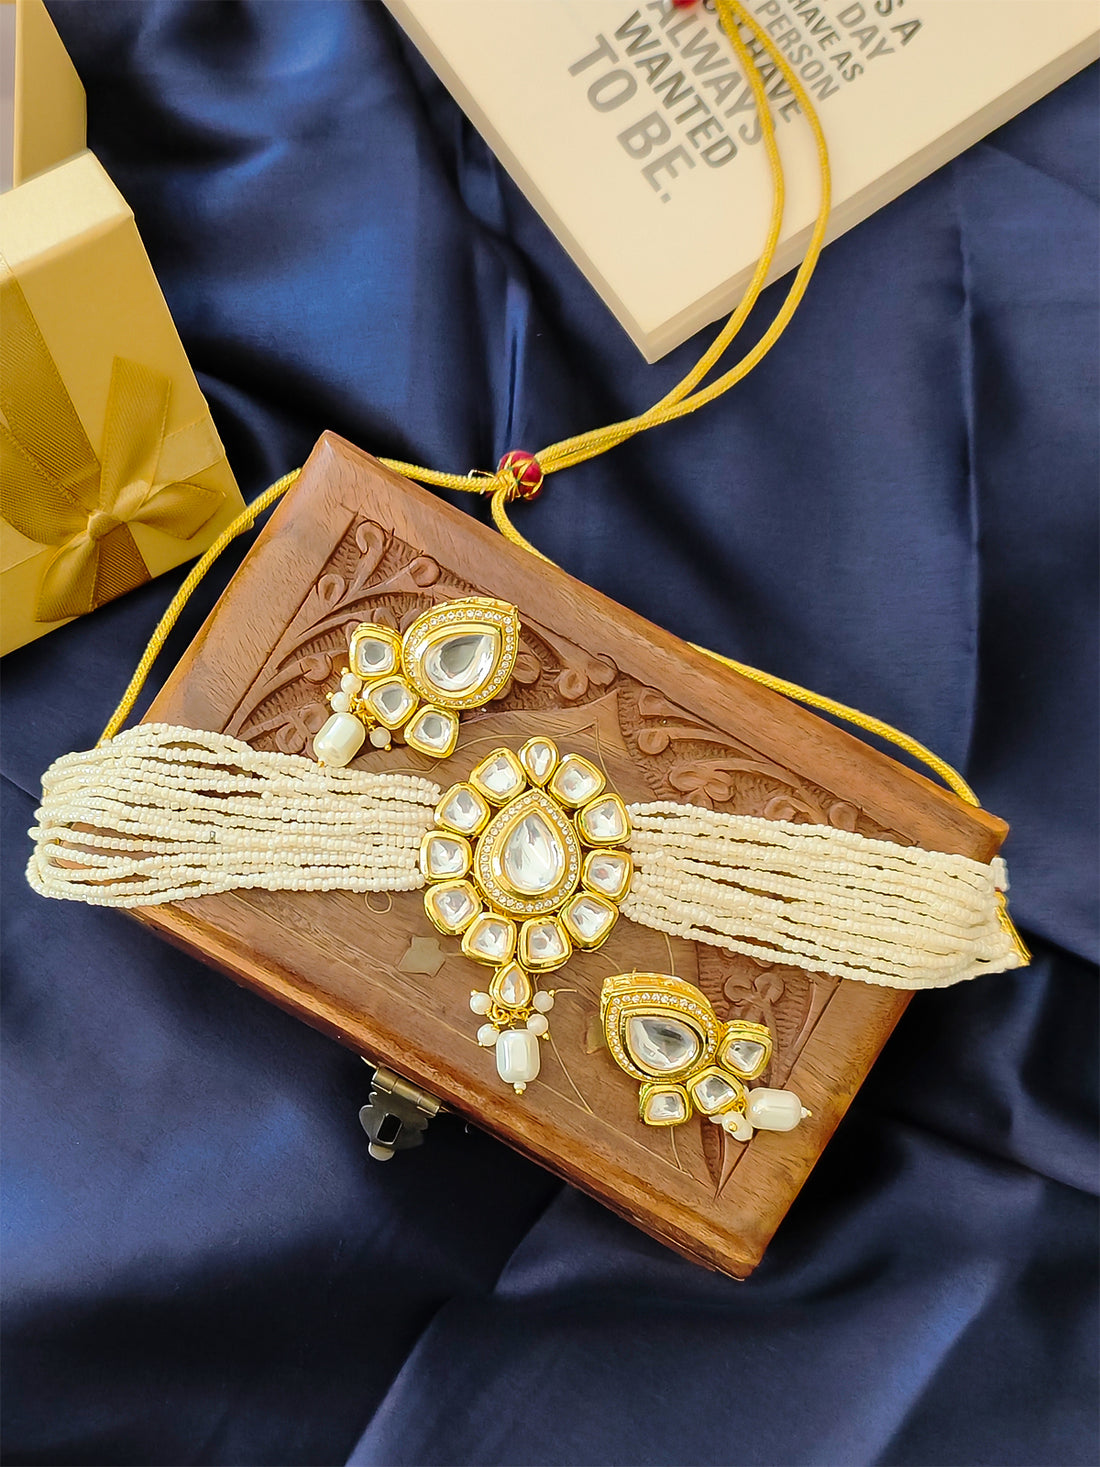 Kundankaari Stone Studded Necklace Set | Chokar Set for Traditional and Festive gifting from the house of Mrigaya by Nandini -White - Mrigaya India